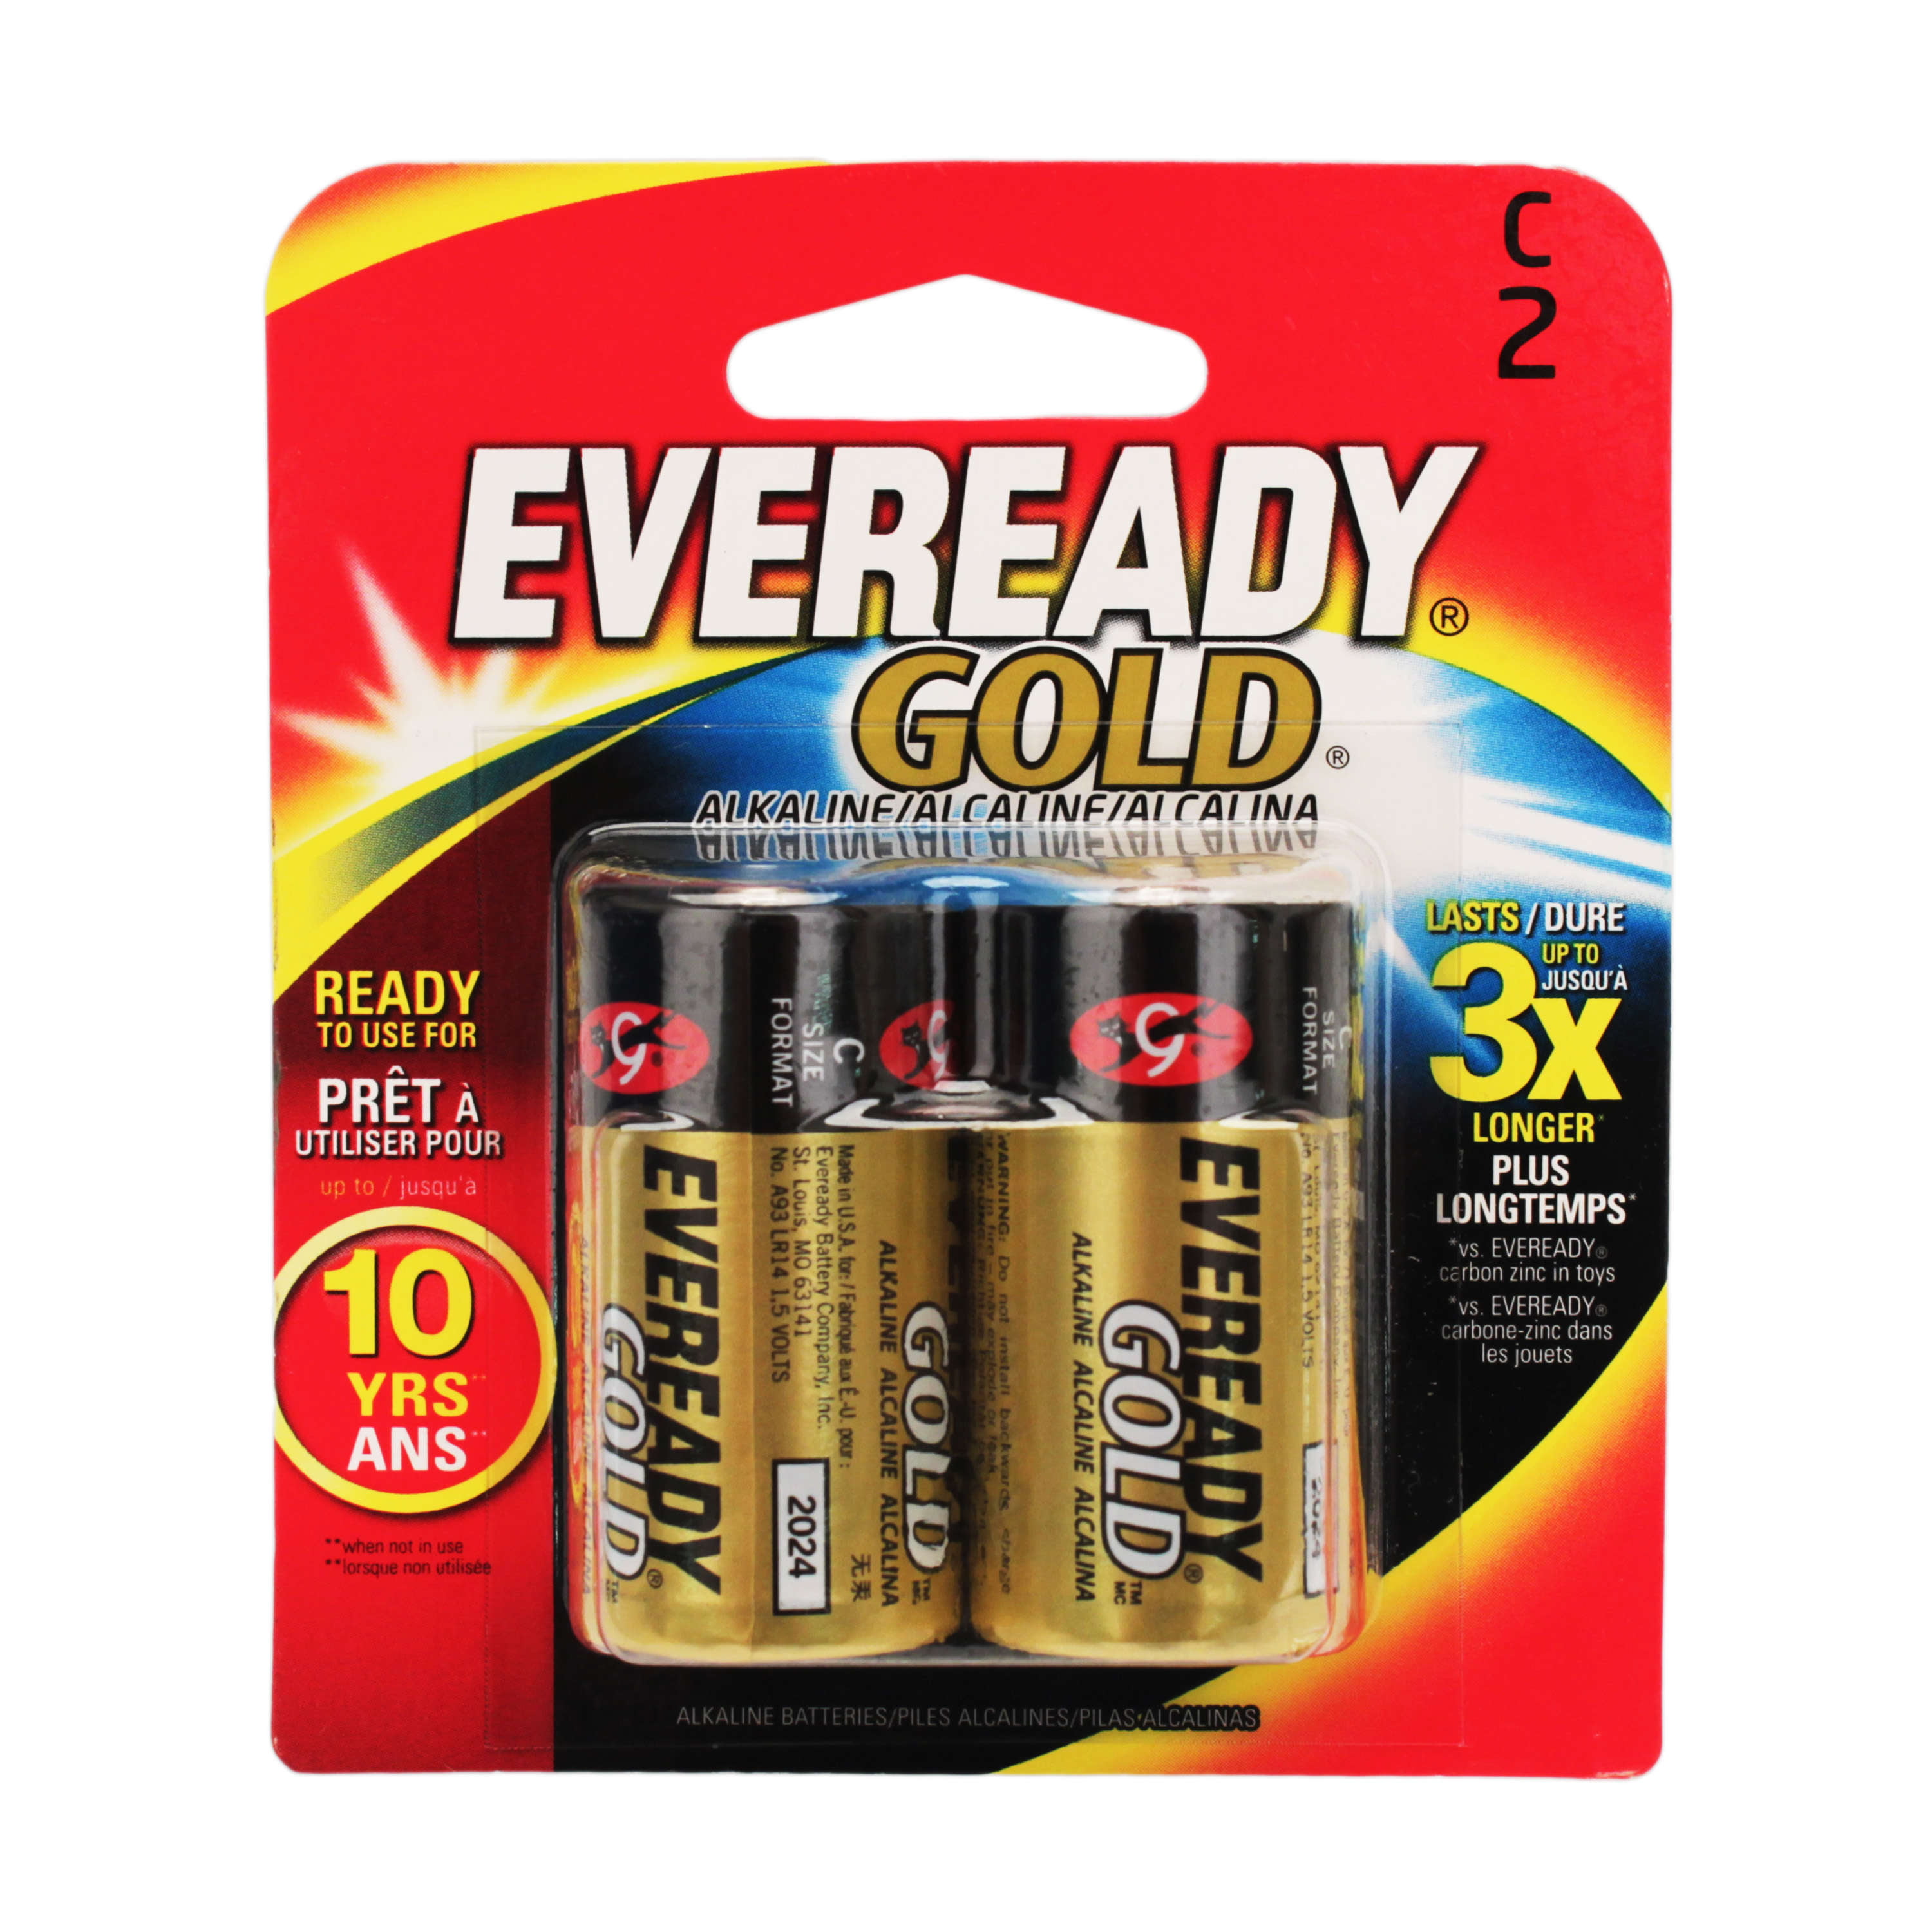 eveready-gold-c-batteries-2-pk-walmart